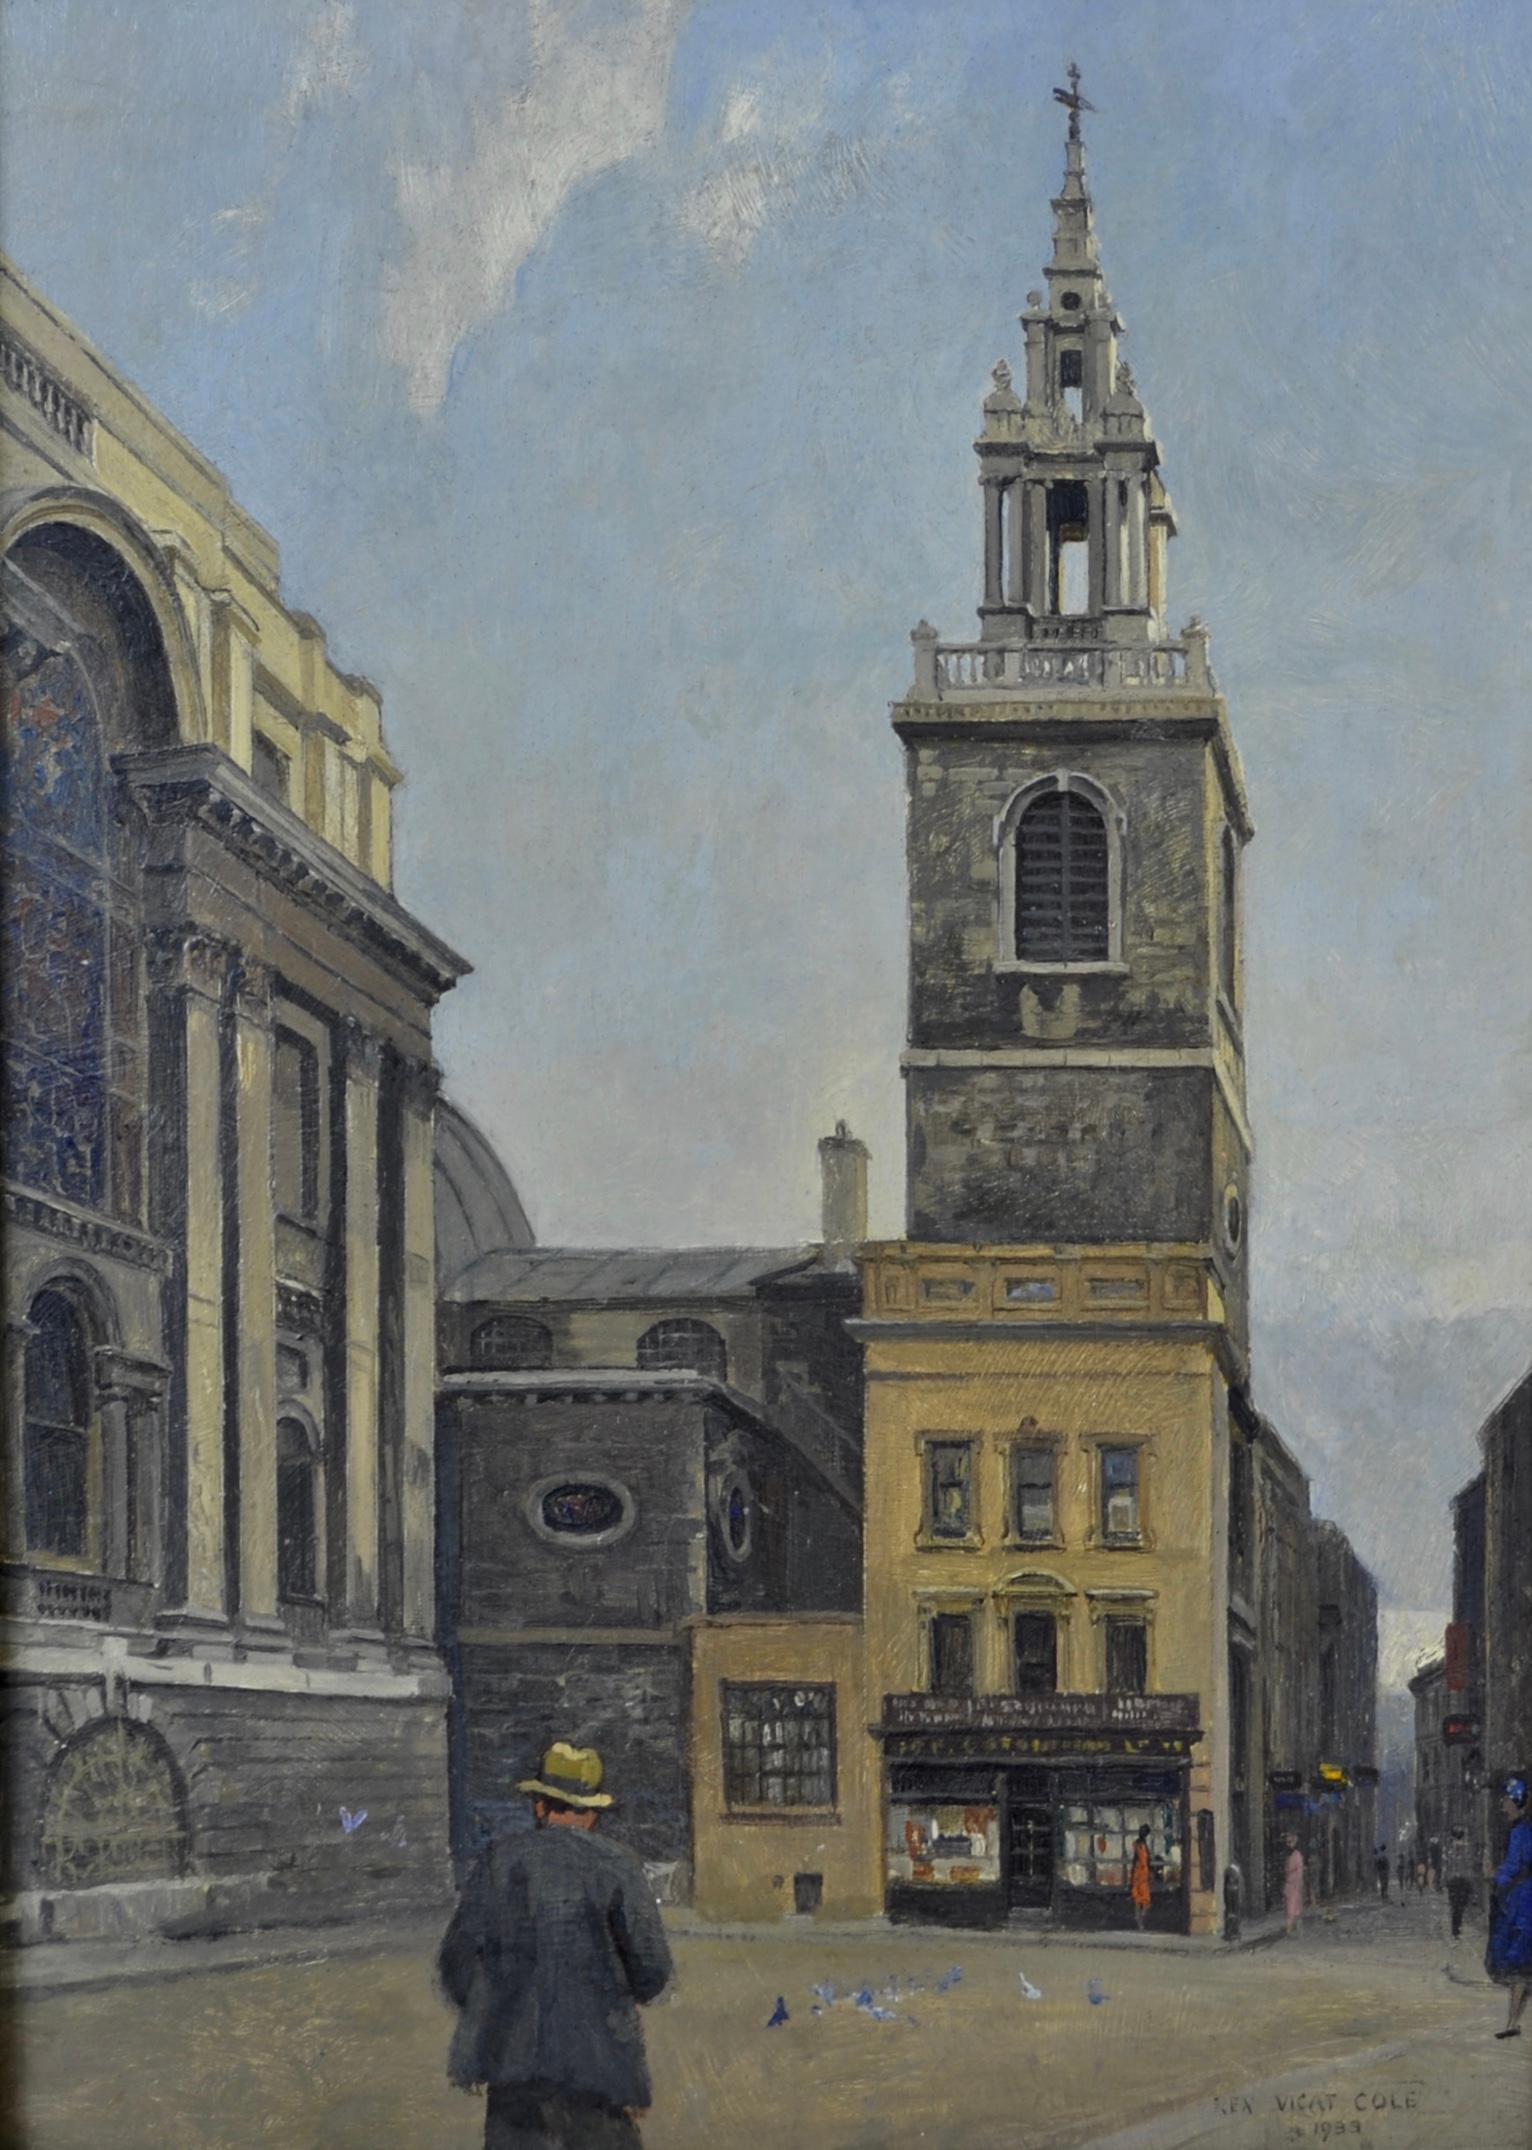 St Stephen Walbrook, 20th Century British London View by Rex Vicat Cole